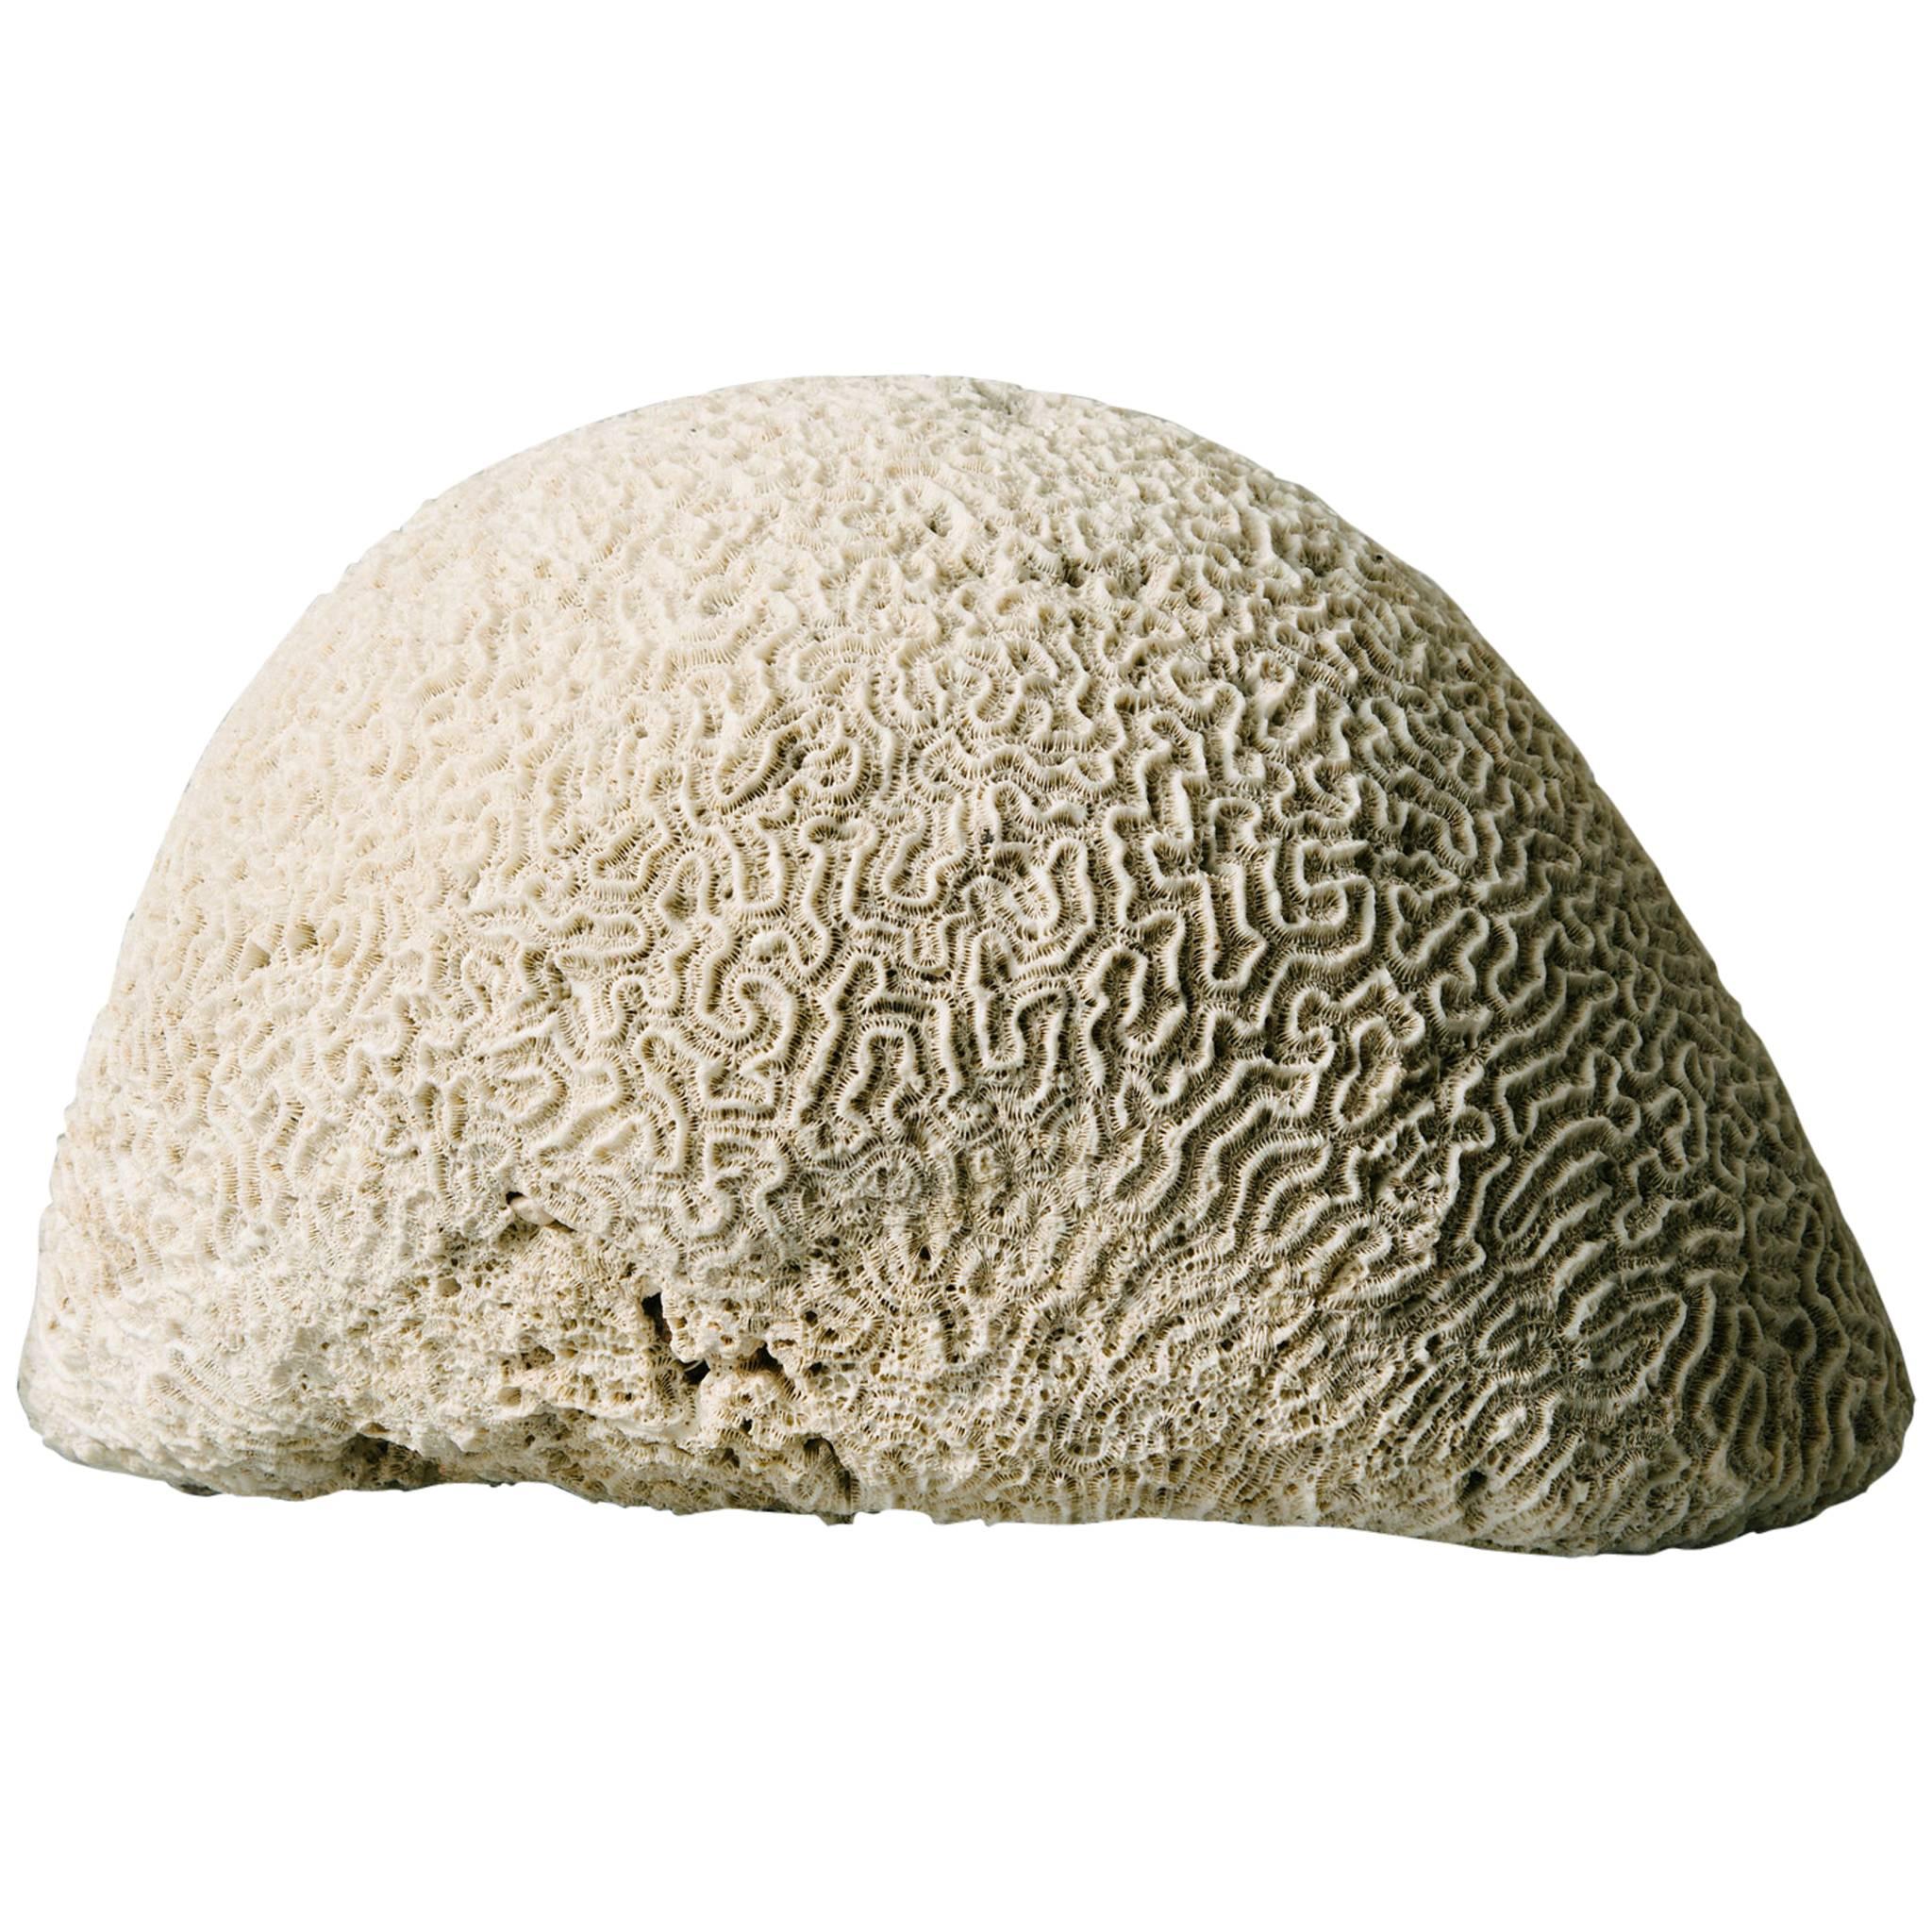 Giant Brain Coral Specimen